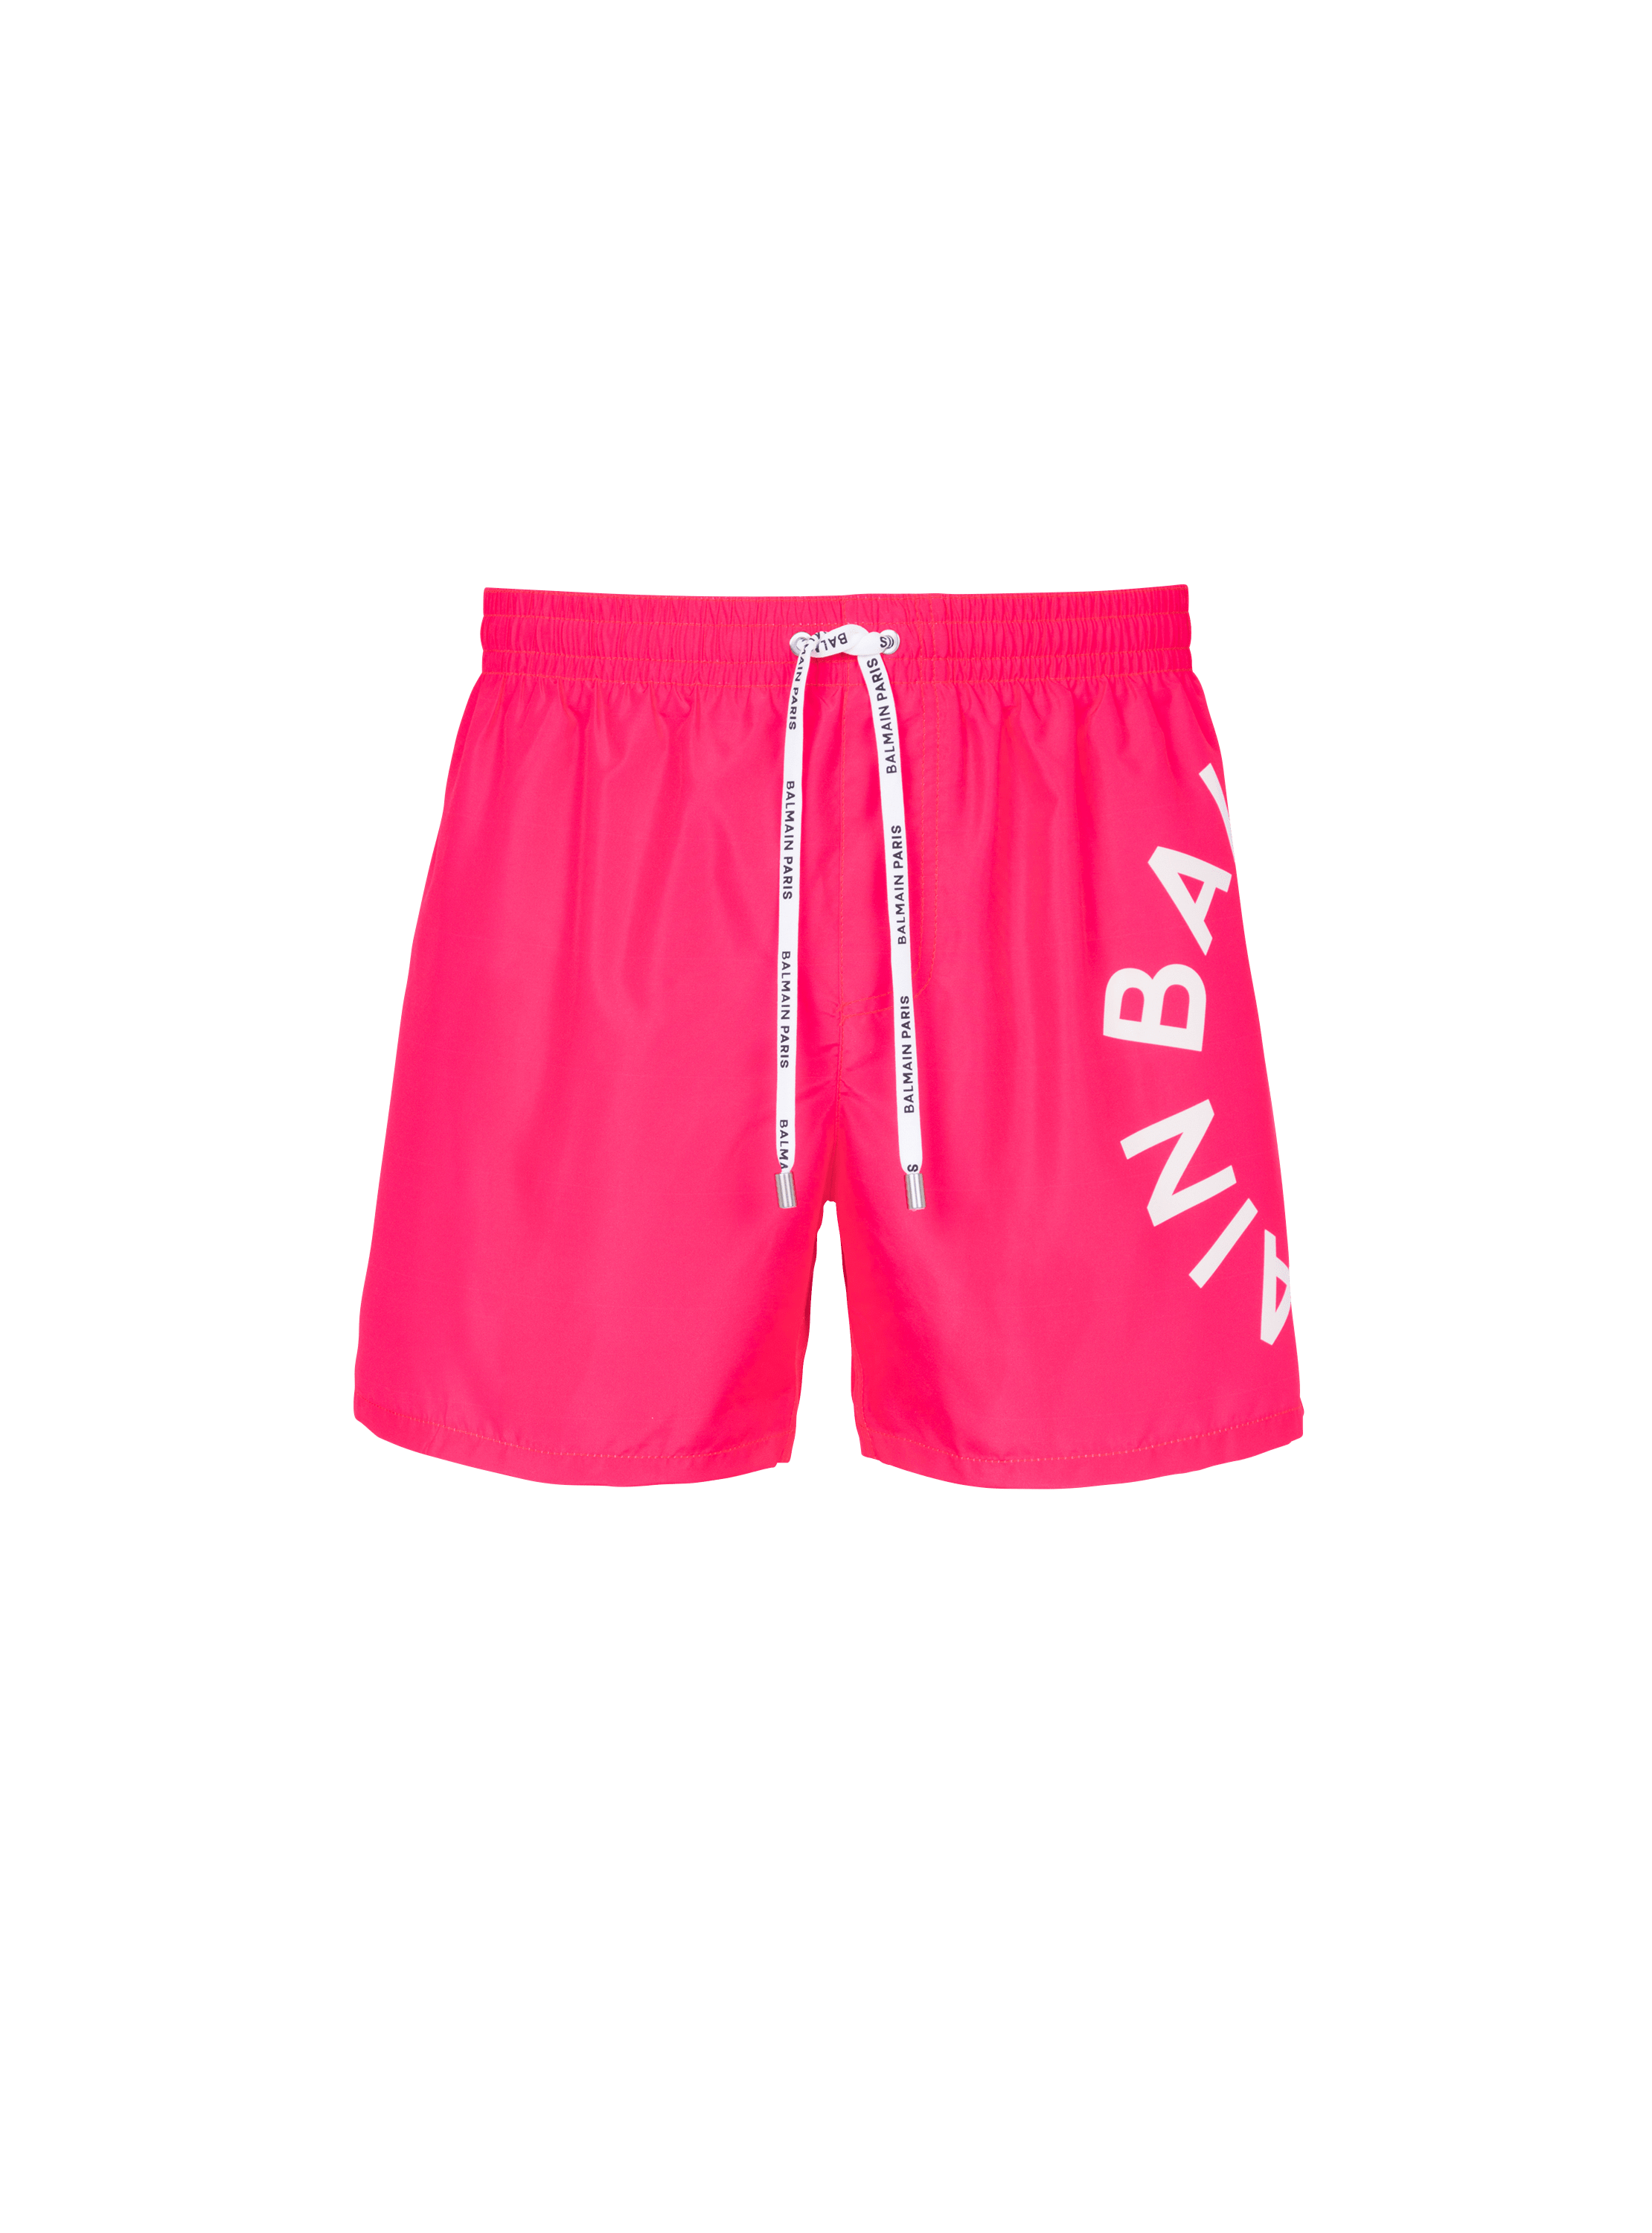 Balmain swim shorts, pink, hi-res